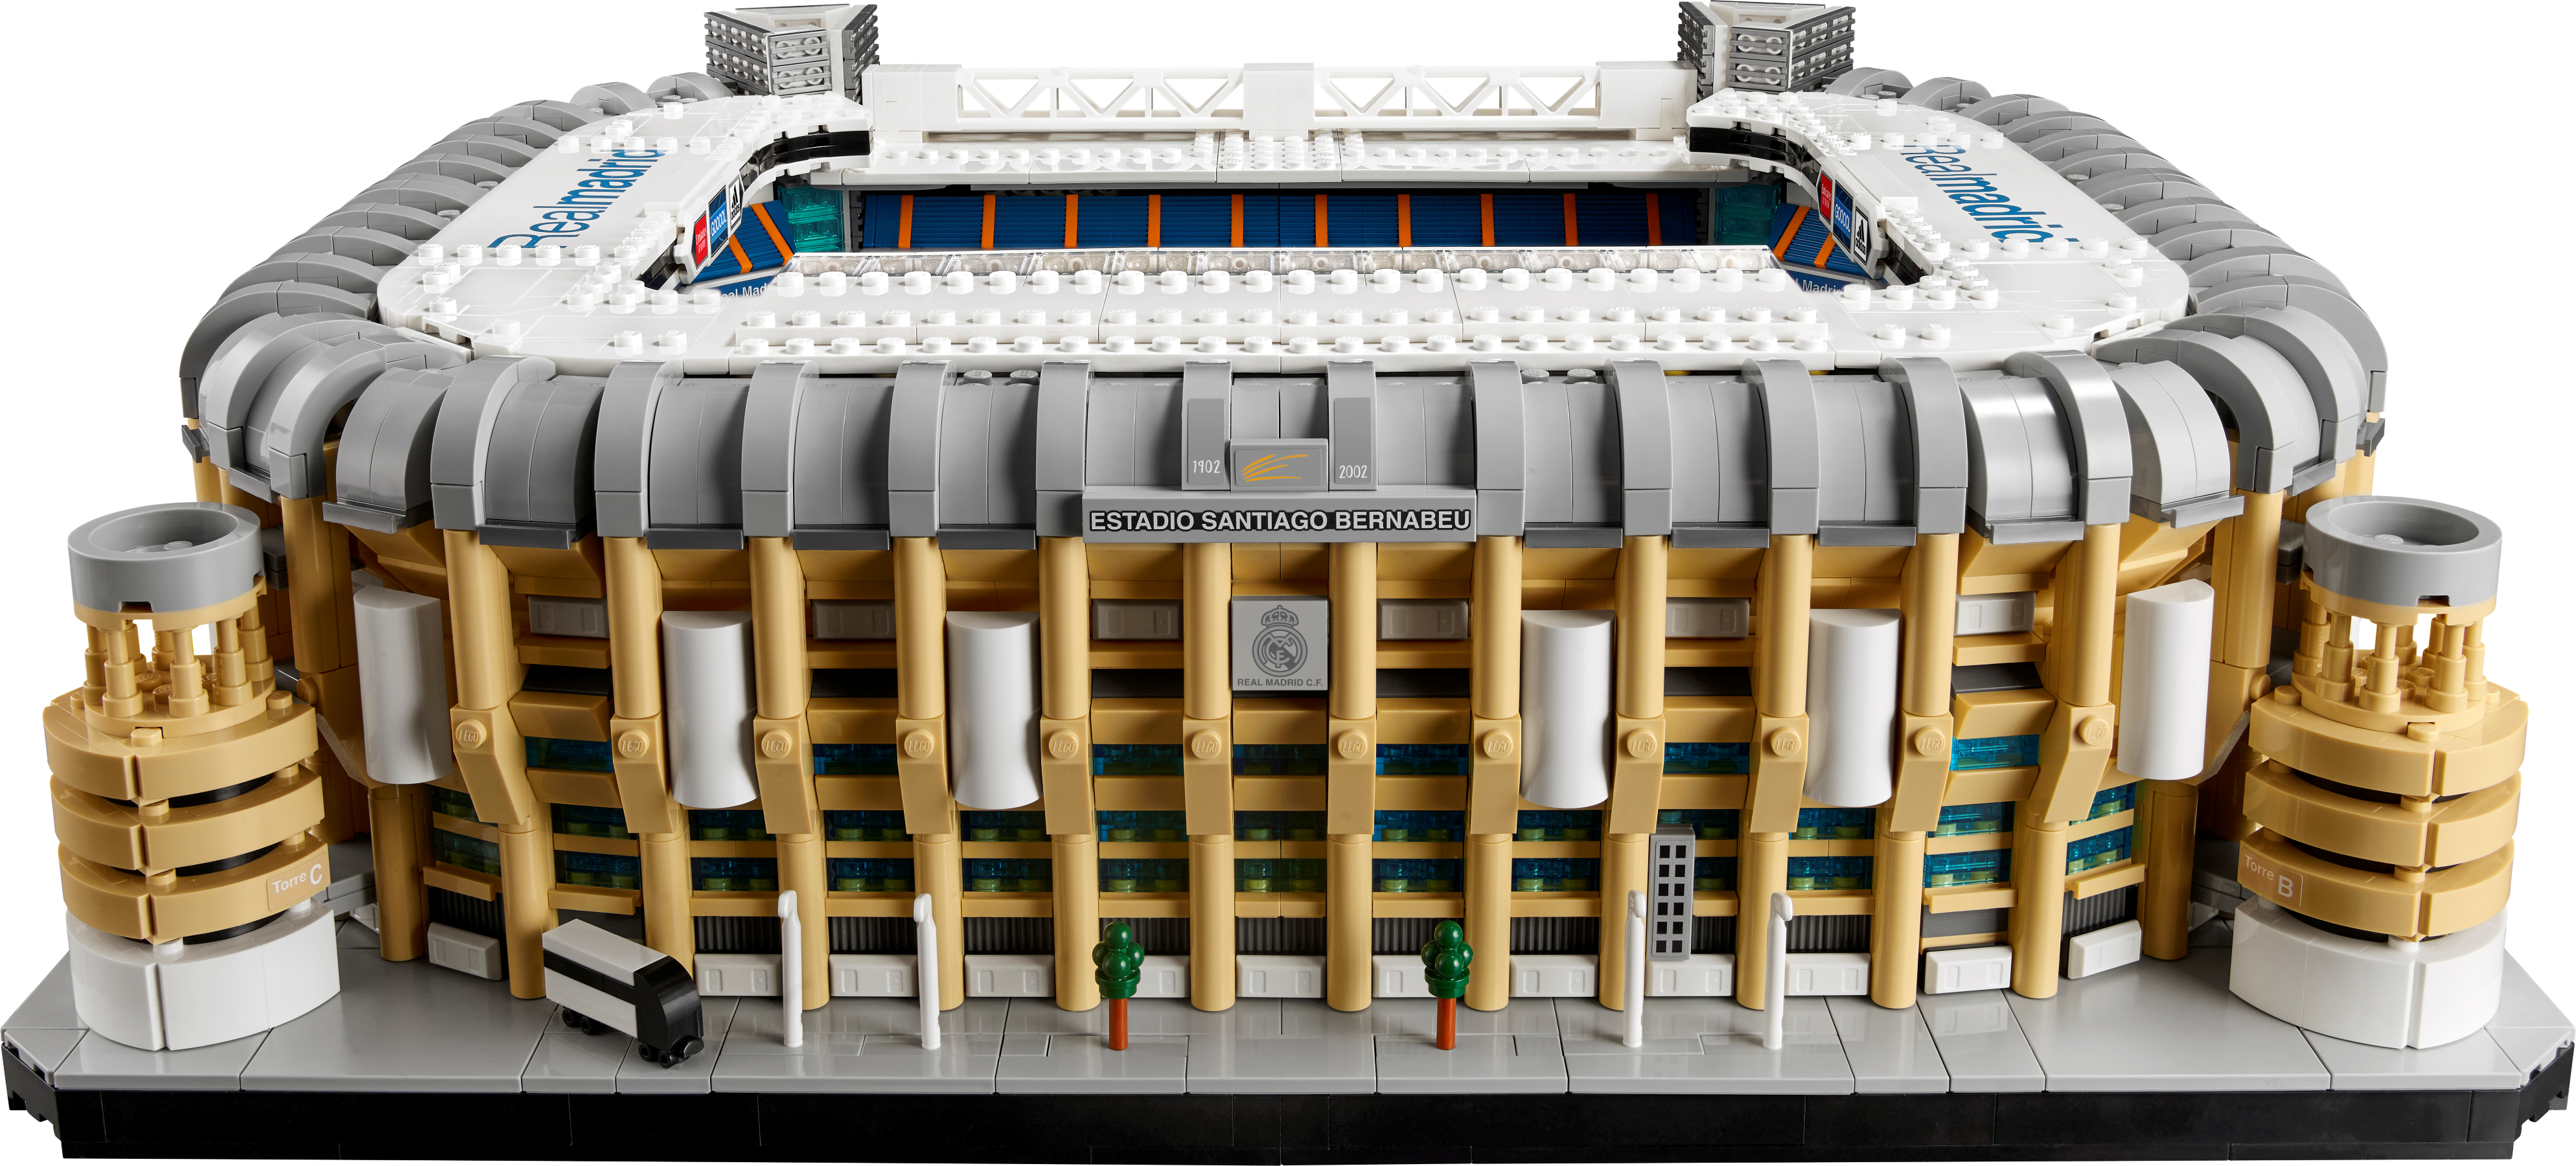 LEGO Creator Expert 10299 Real Madrid - Santiago Bernabéu Stadium Speed  Build - AustrianBrickFan 